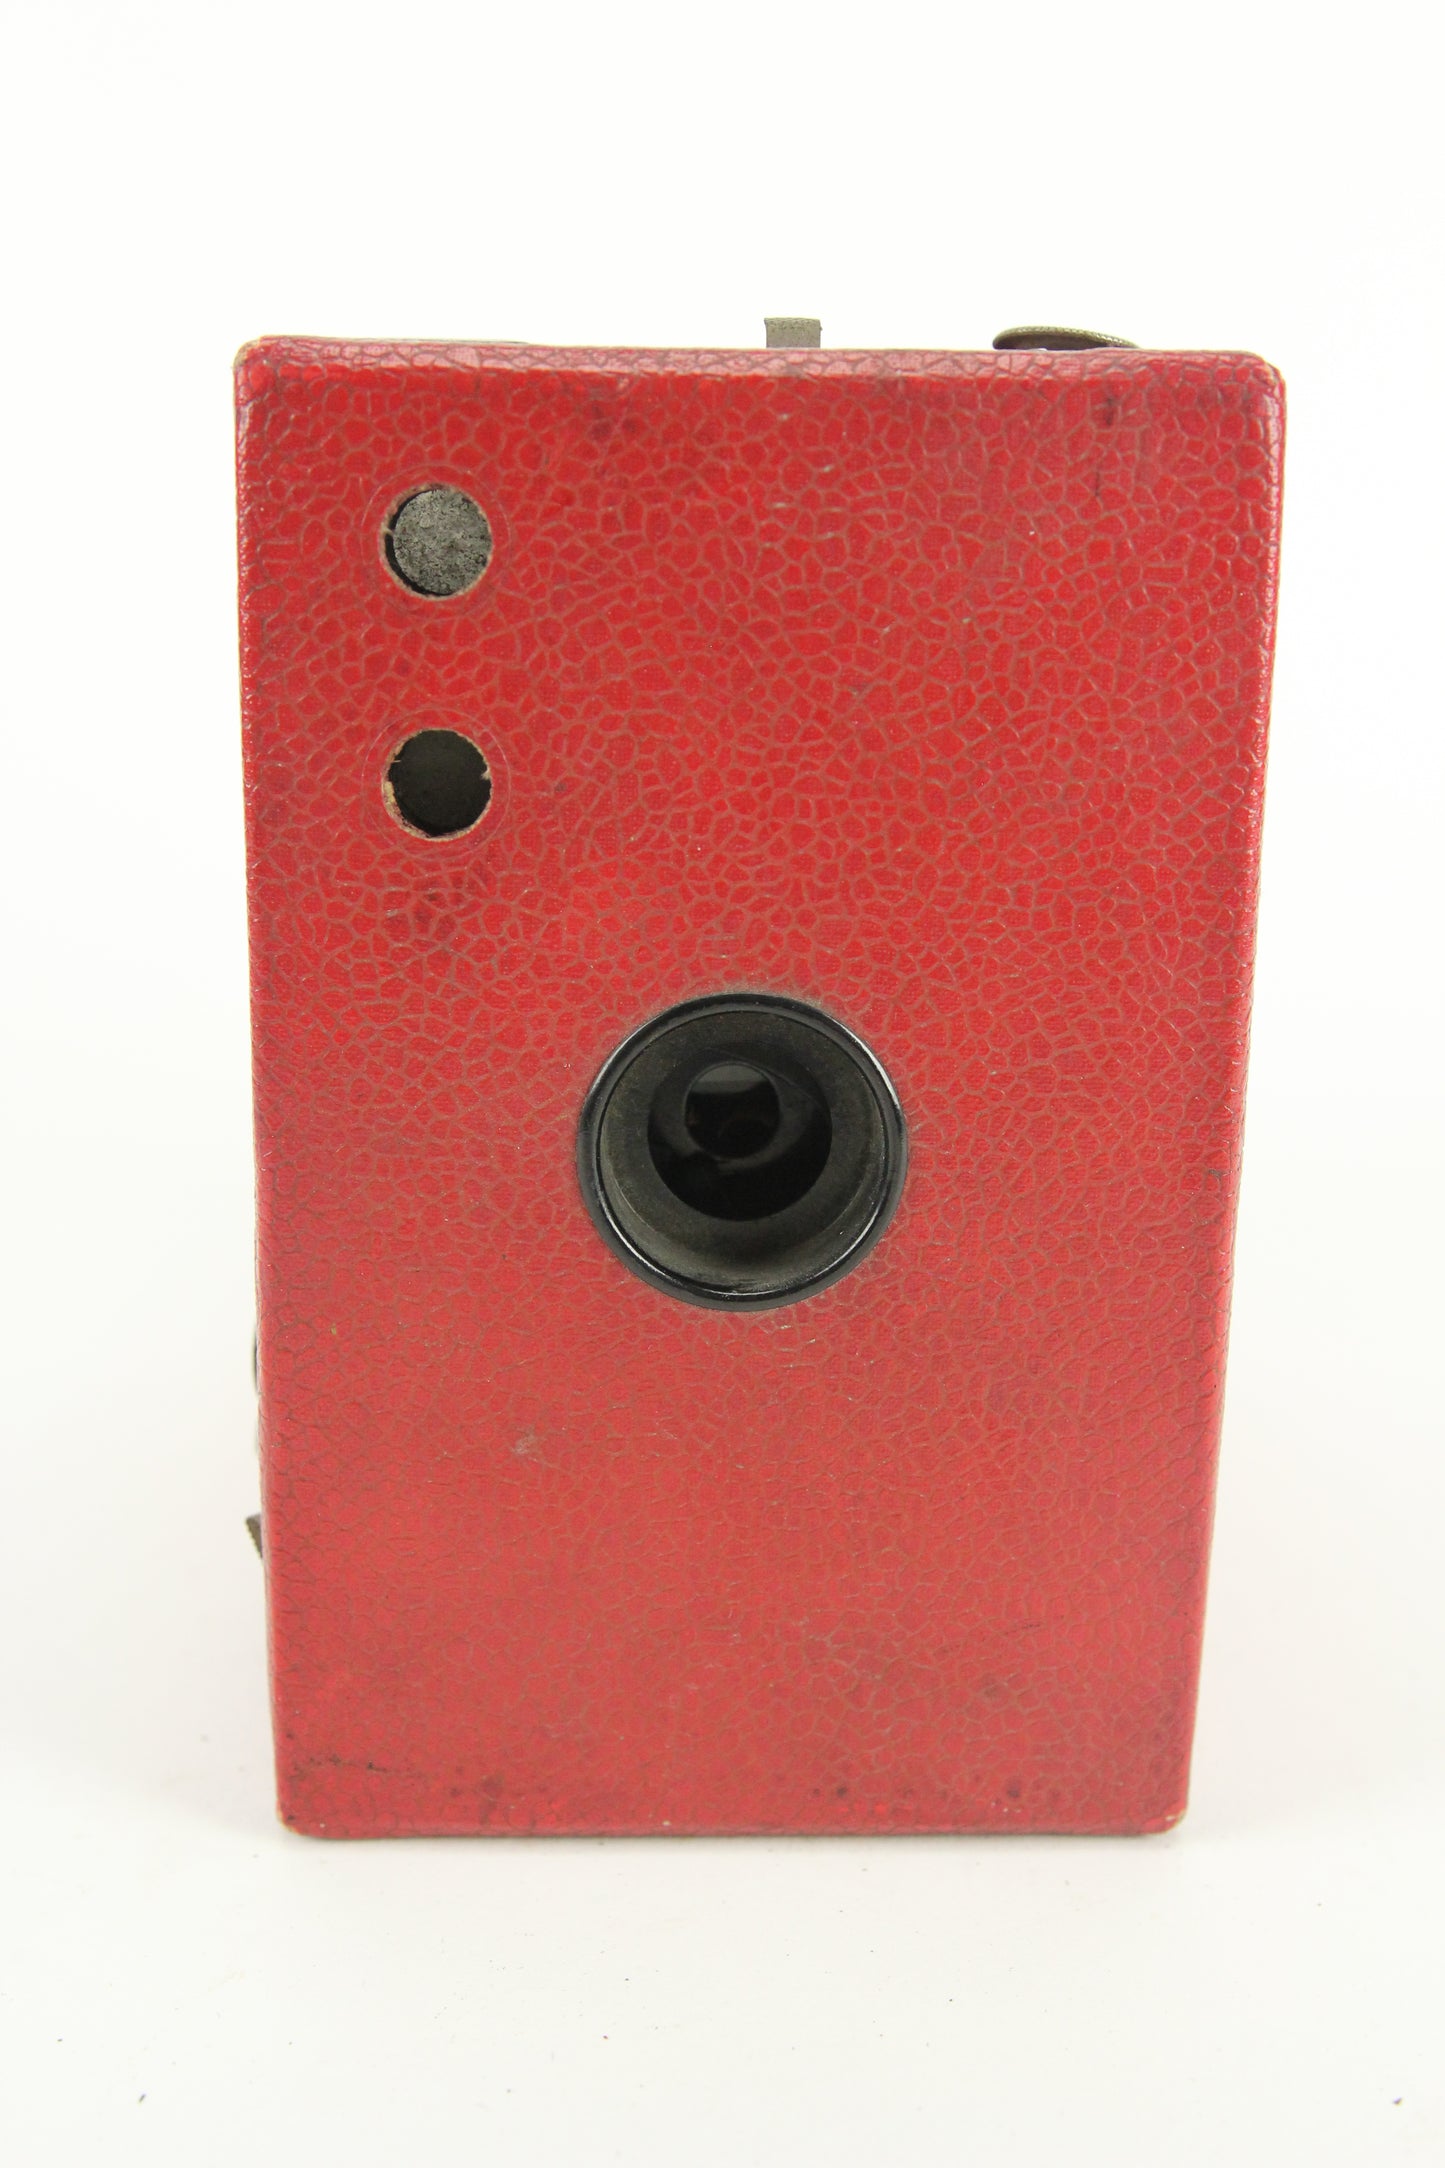 Eastman Kodak Rainbow Hawk-Eye No. 2A Model B Box Camera (Red Color), 1916